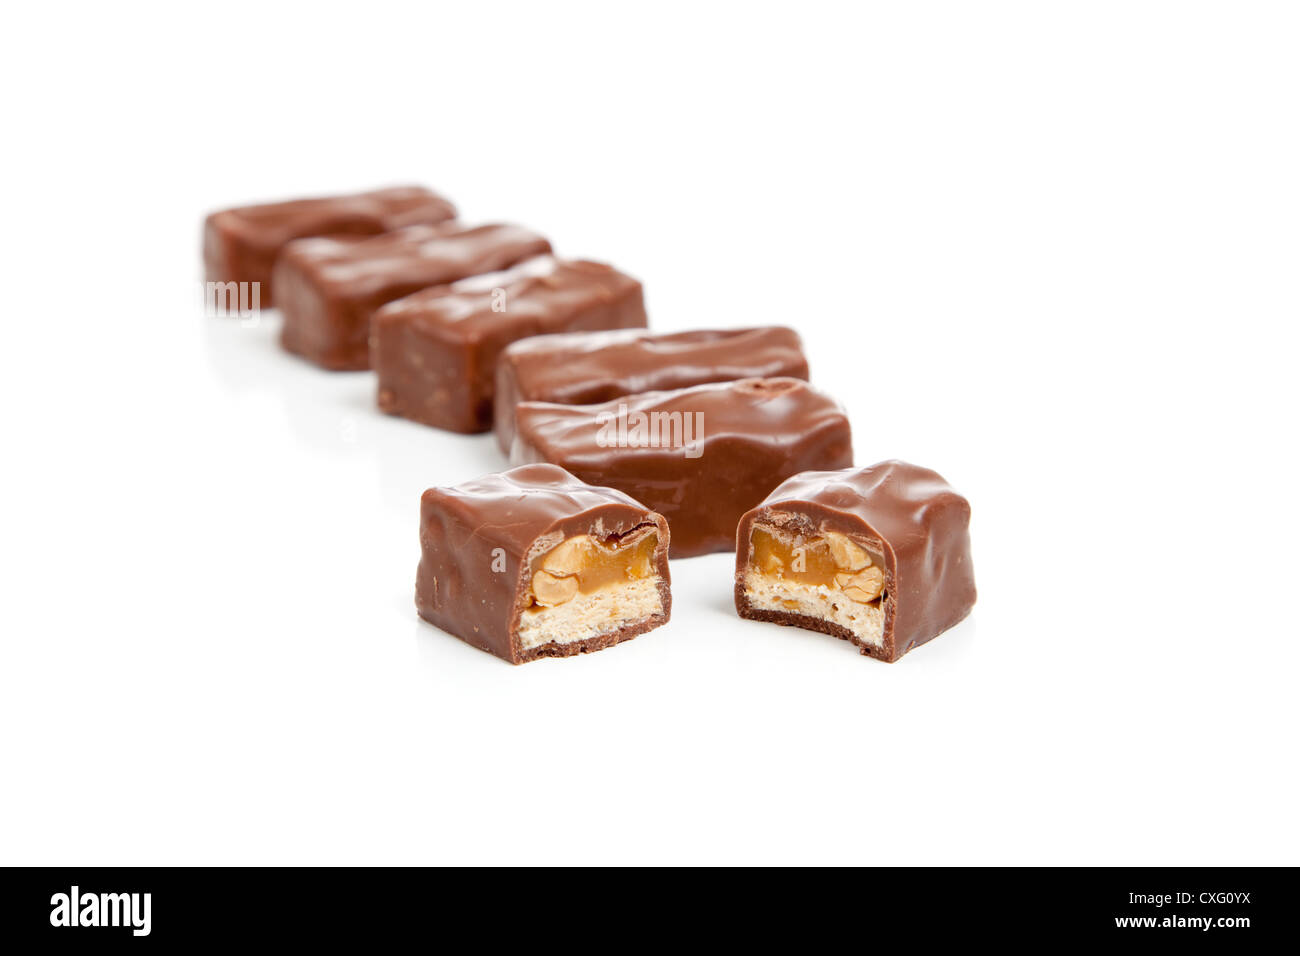 Row of chocolate candy bars Stock Photo